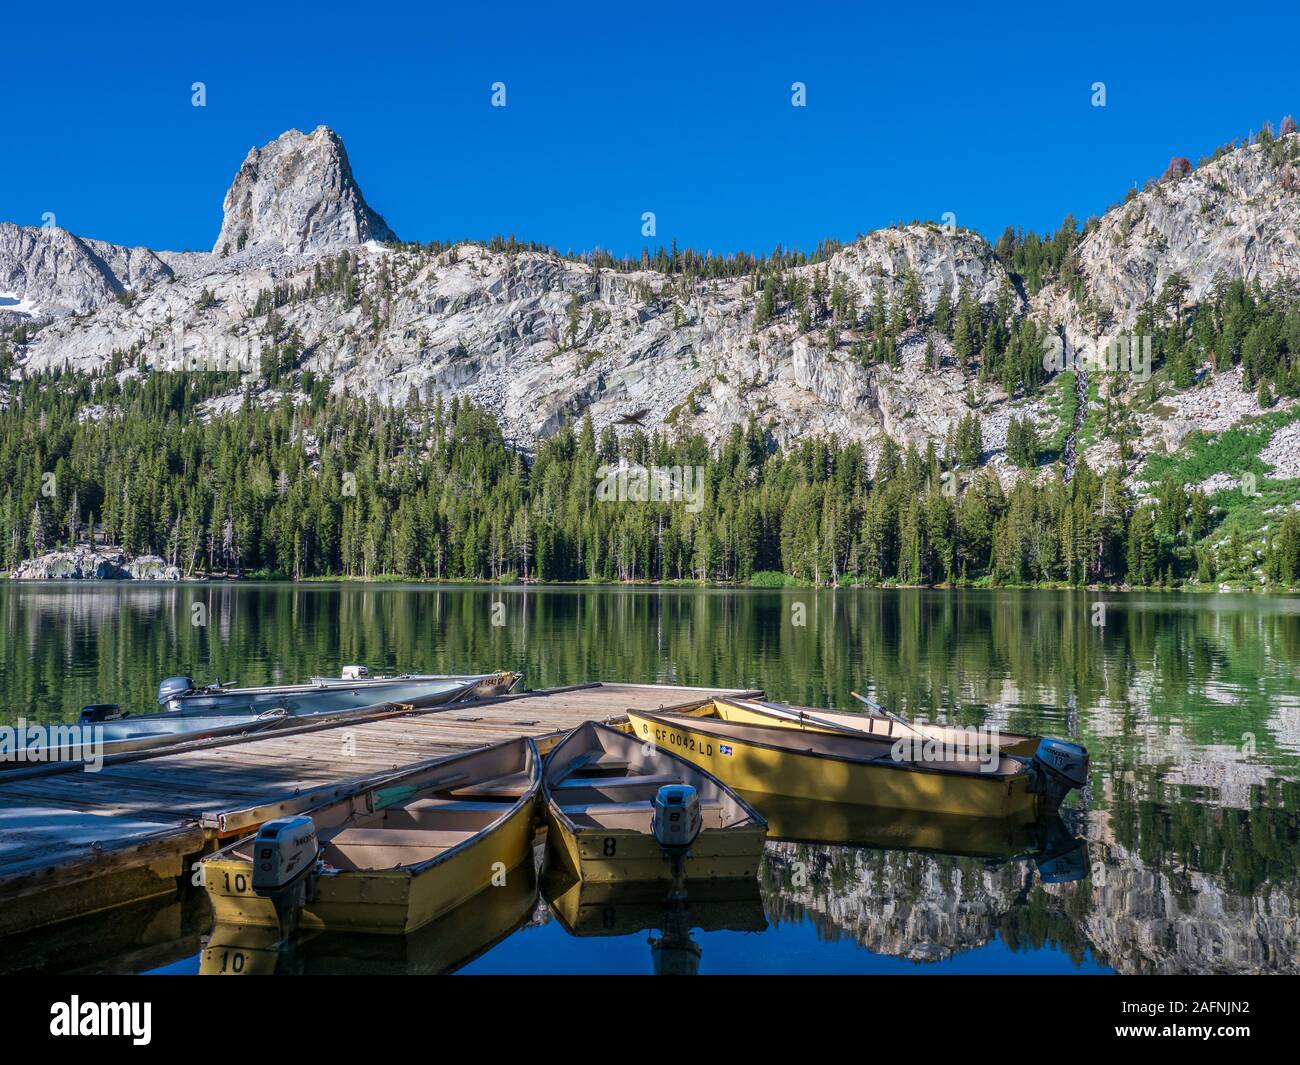 Boats at the dock, Lake George, Mammoth Lakes, California. Stock Photo